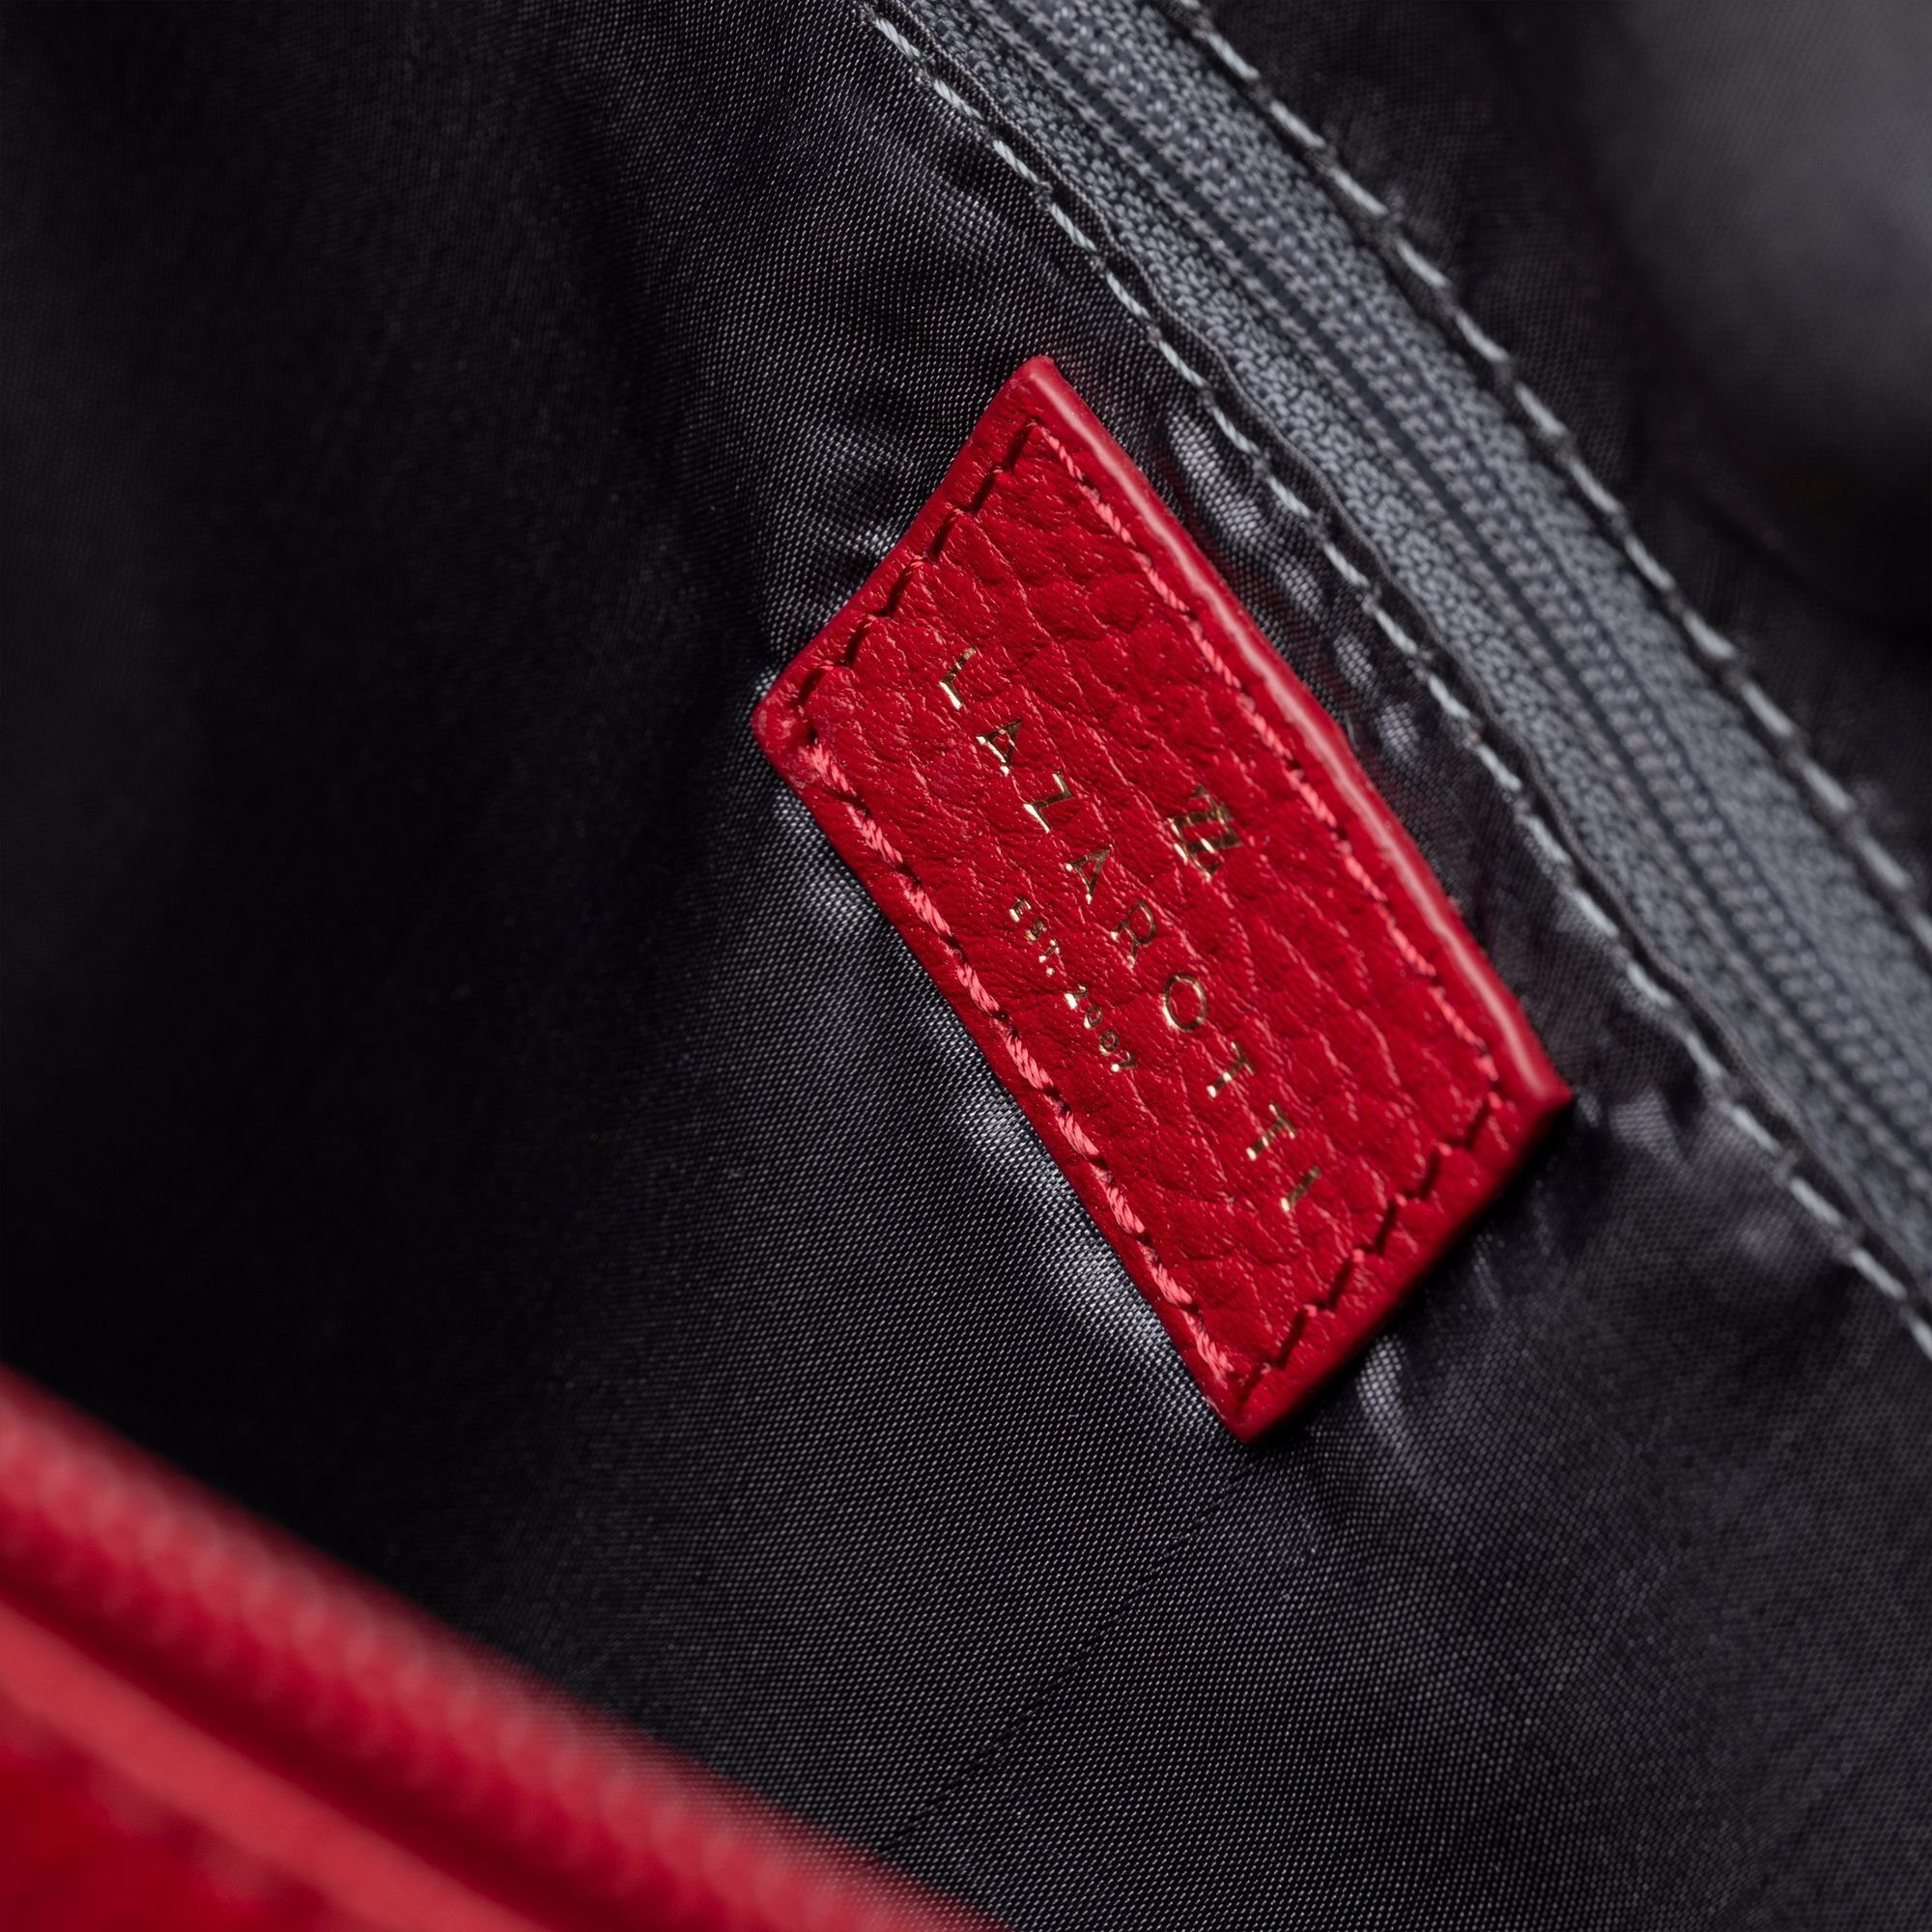 Bologna Leather, red Umhängetasche Lazarotti Leder